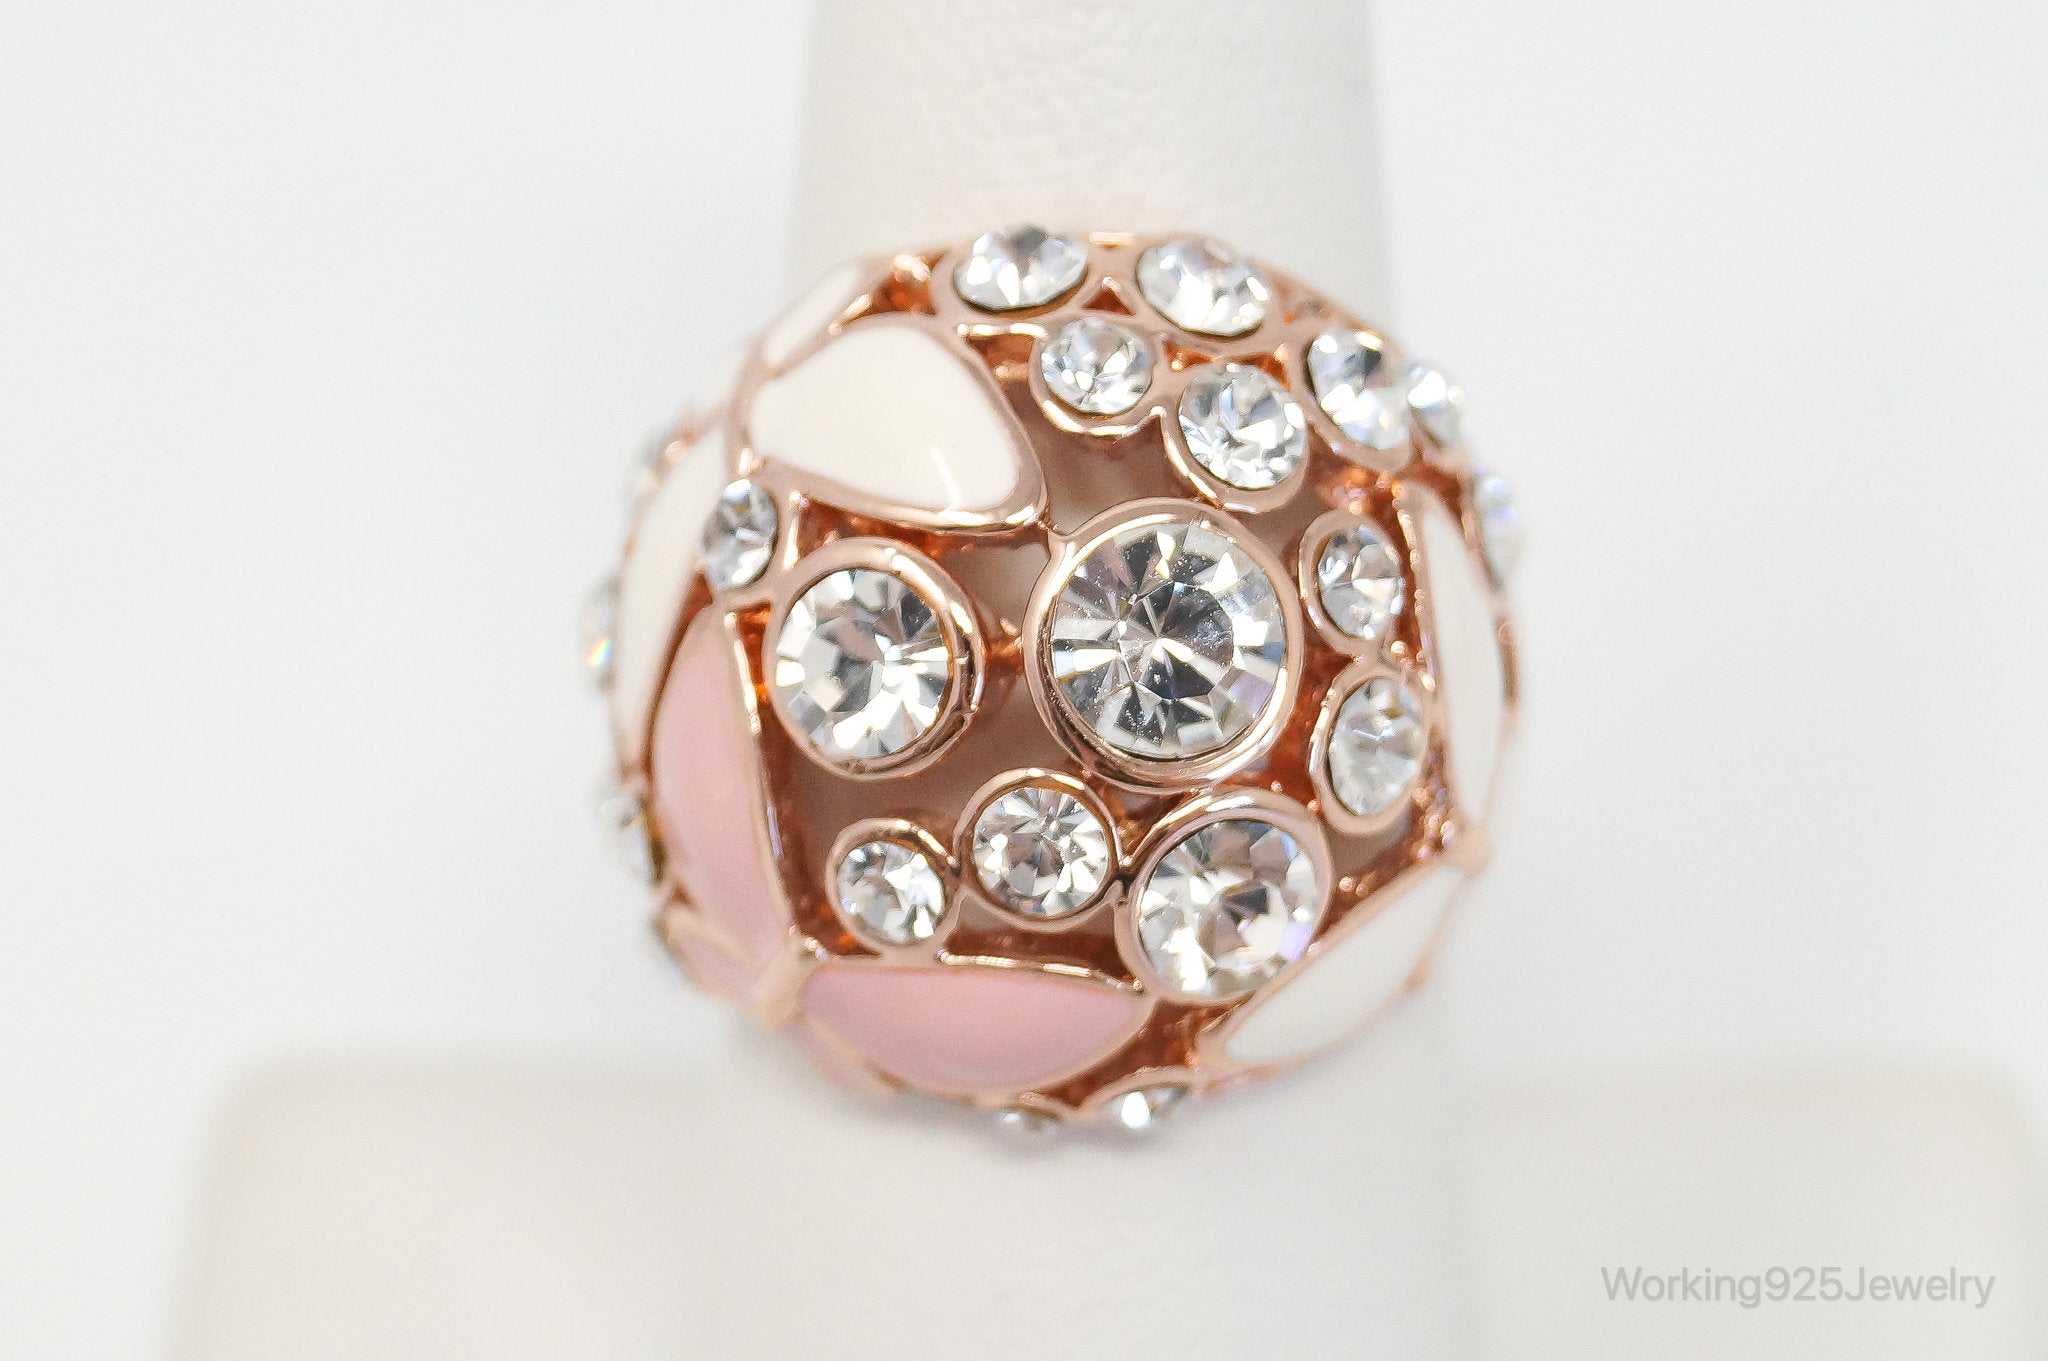 VTG Rose Gold Enamel Crystals & Butterflies Statement Costume Ring Size 7